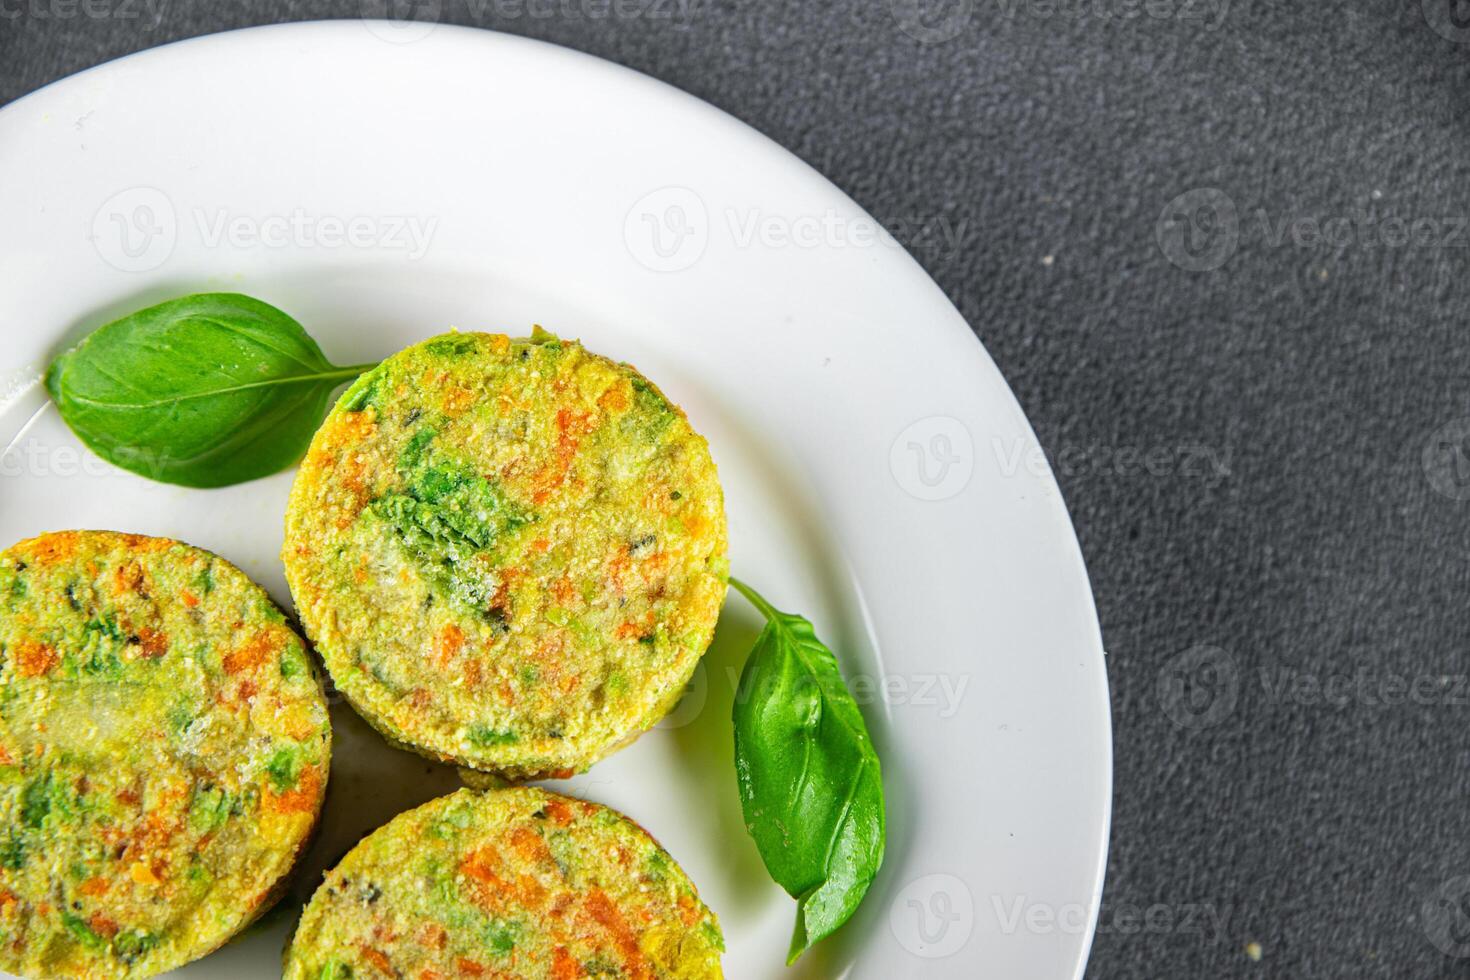 vegetarian cutlet vegetable carrot, broccoli, potatoes fresh vegan food tasty healthy eating meal photo